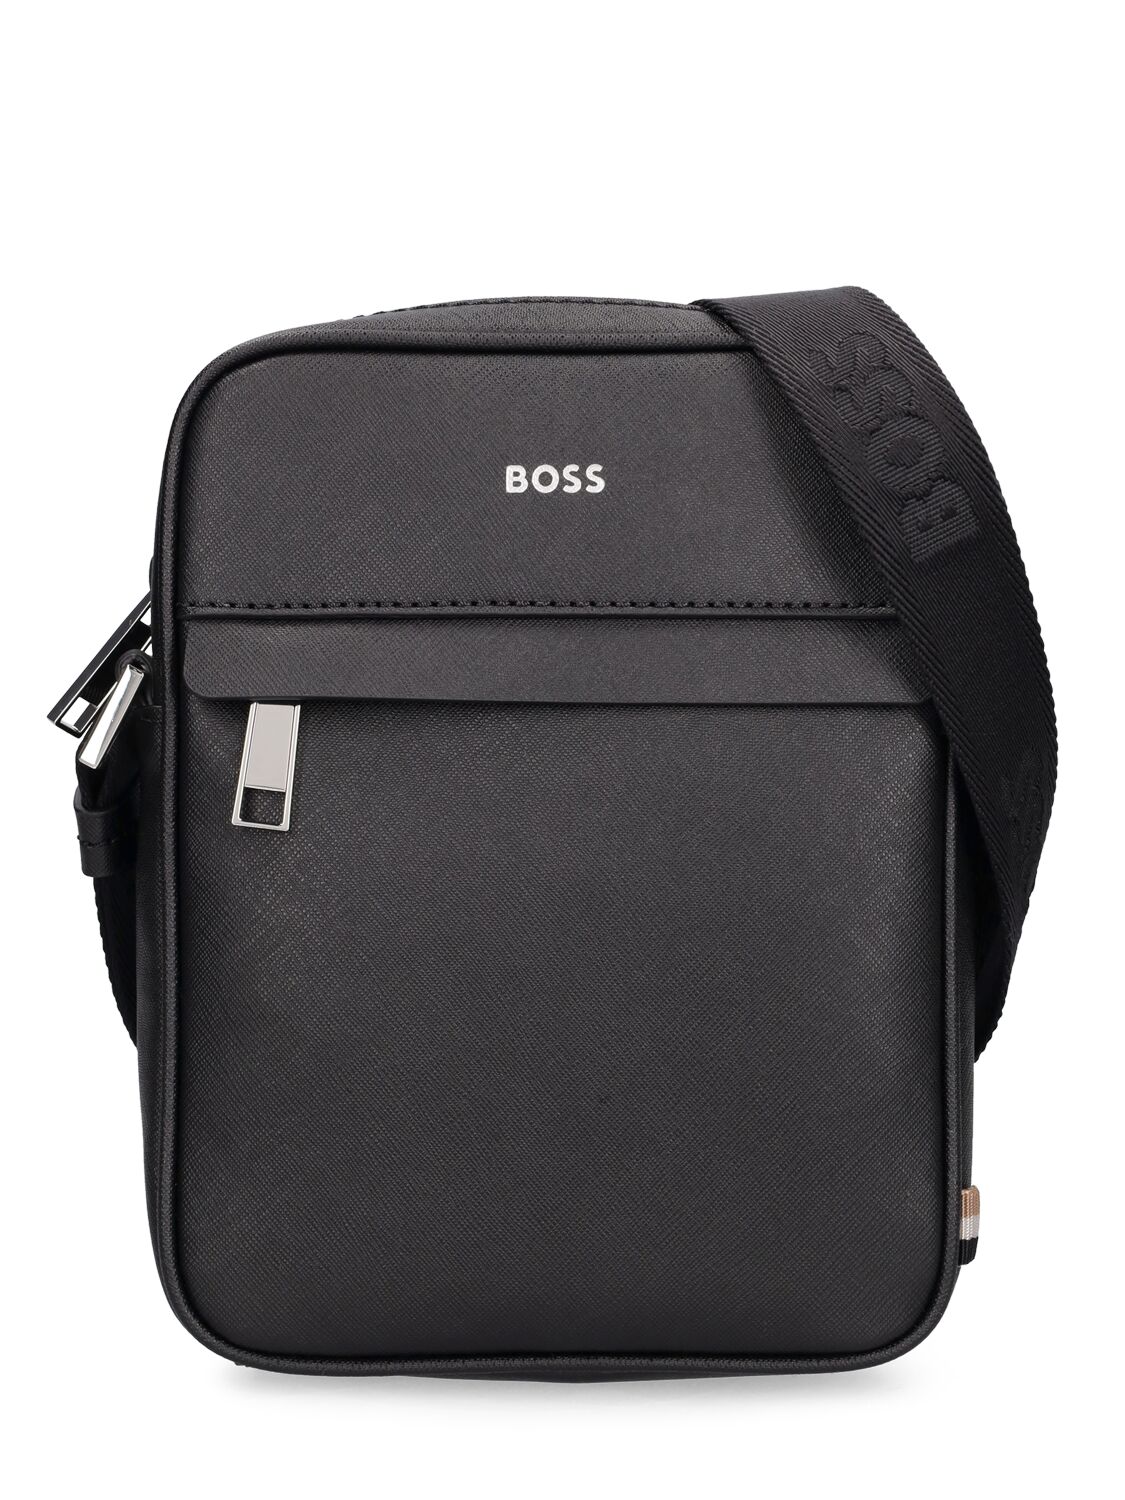 Hugo Boss Zair Zip Leather Crossbody Bag In Black